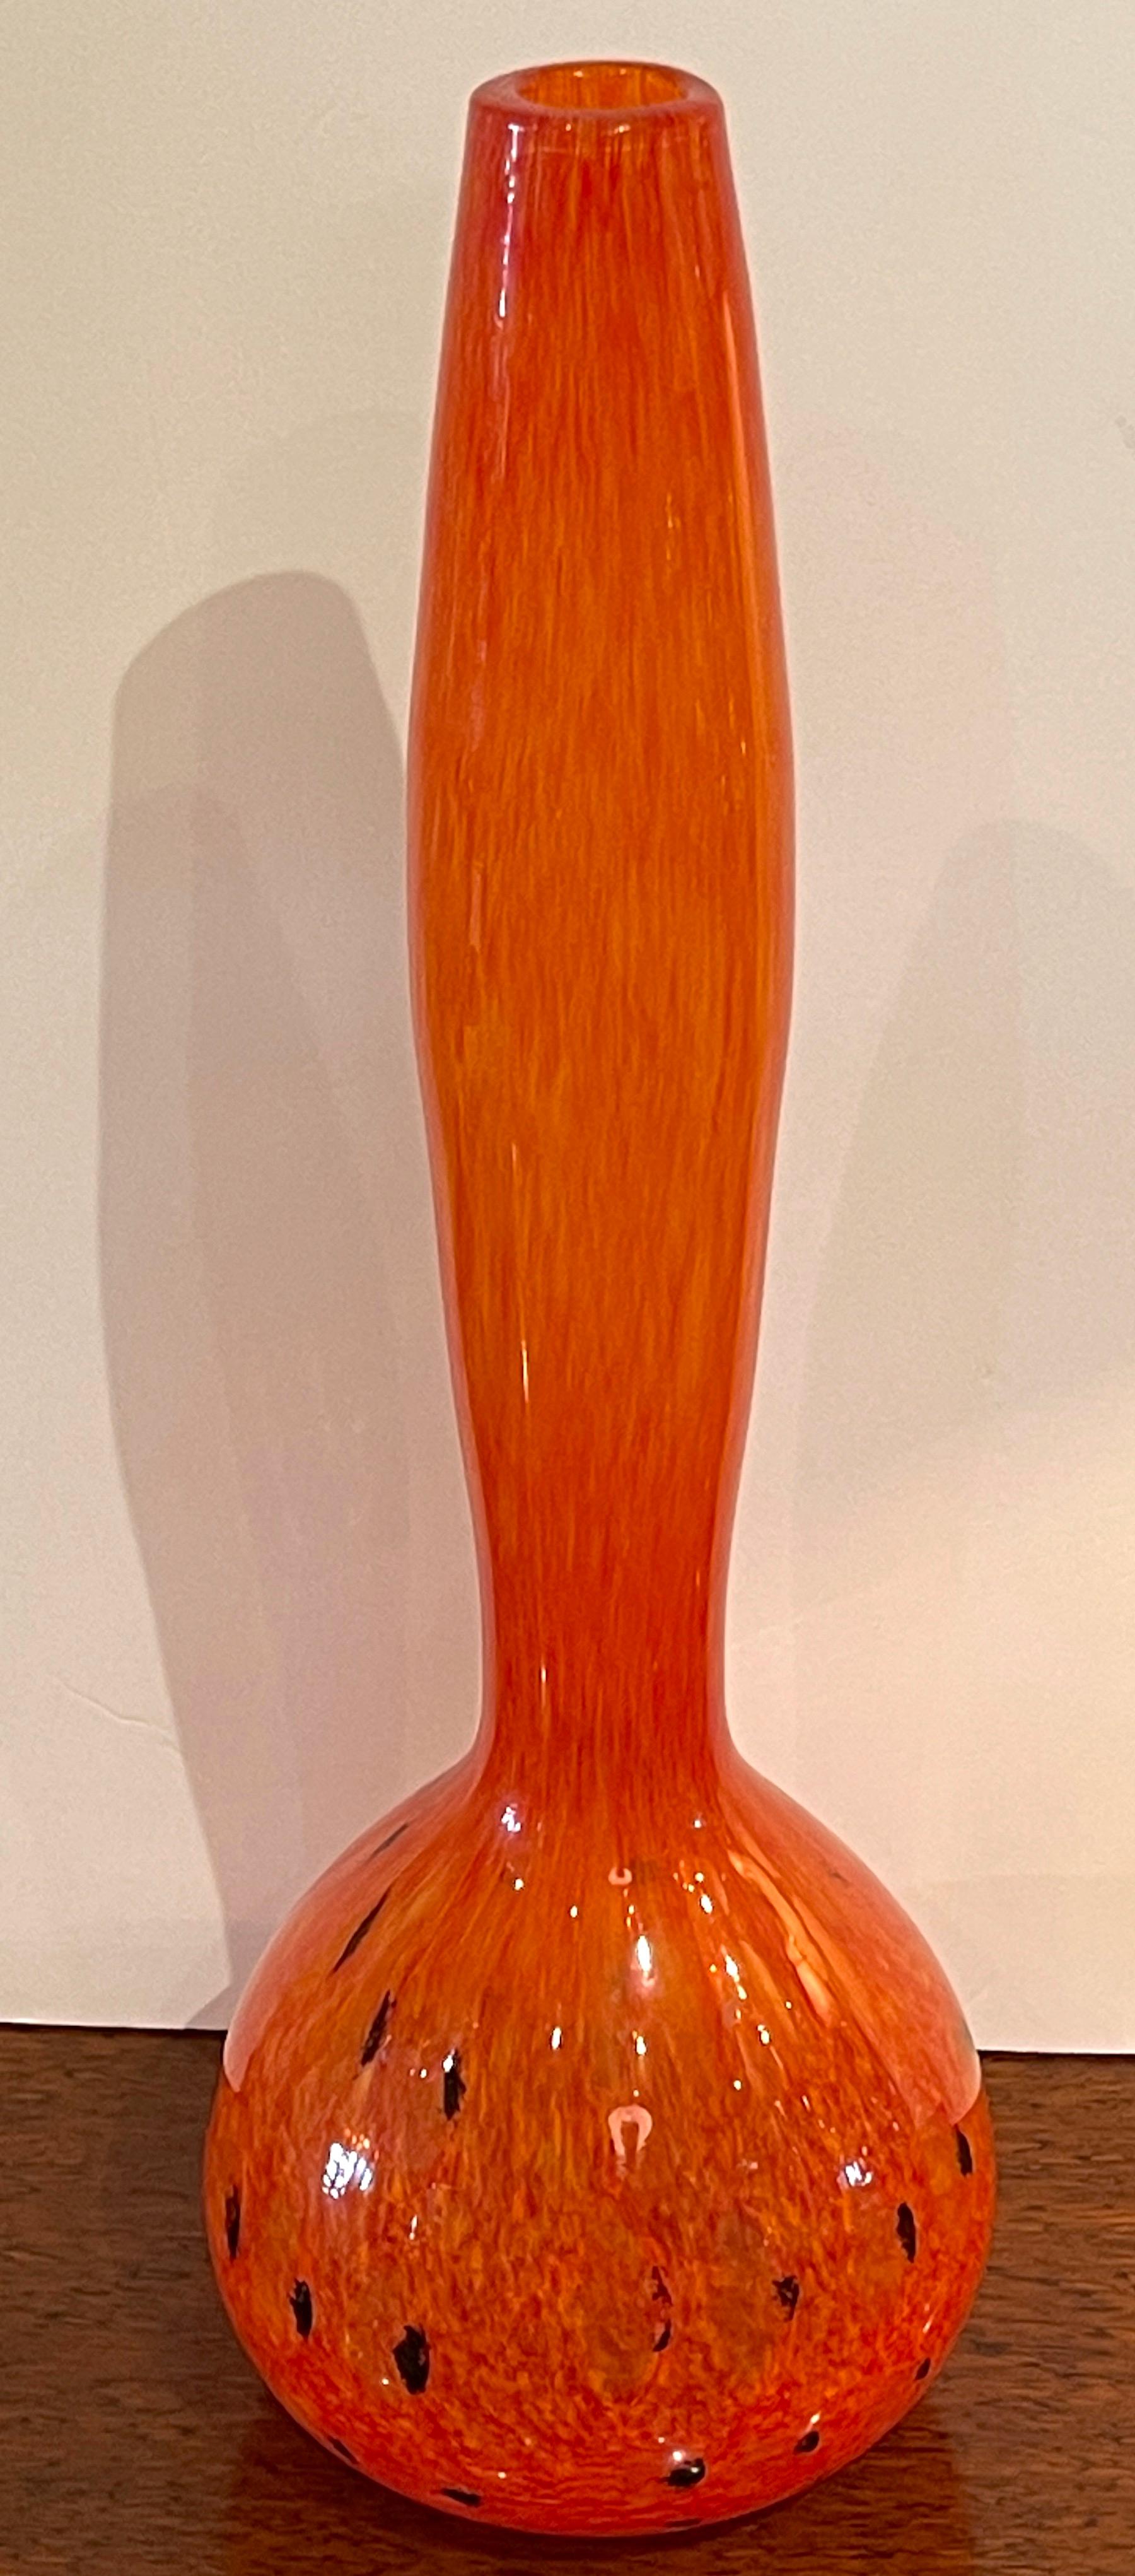 Art Deco schneider orange & black 'Leopard' Art glass motif tapered vase 
The tall handblown orange art glass vase with a tapering neck descending to a subtle black spotted 6-inch diameter circular bottom. signed in script signature 'Schneider'.
 